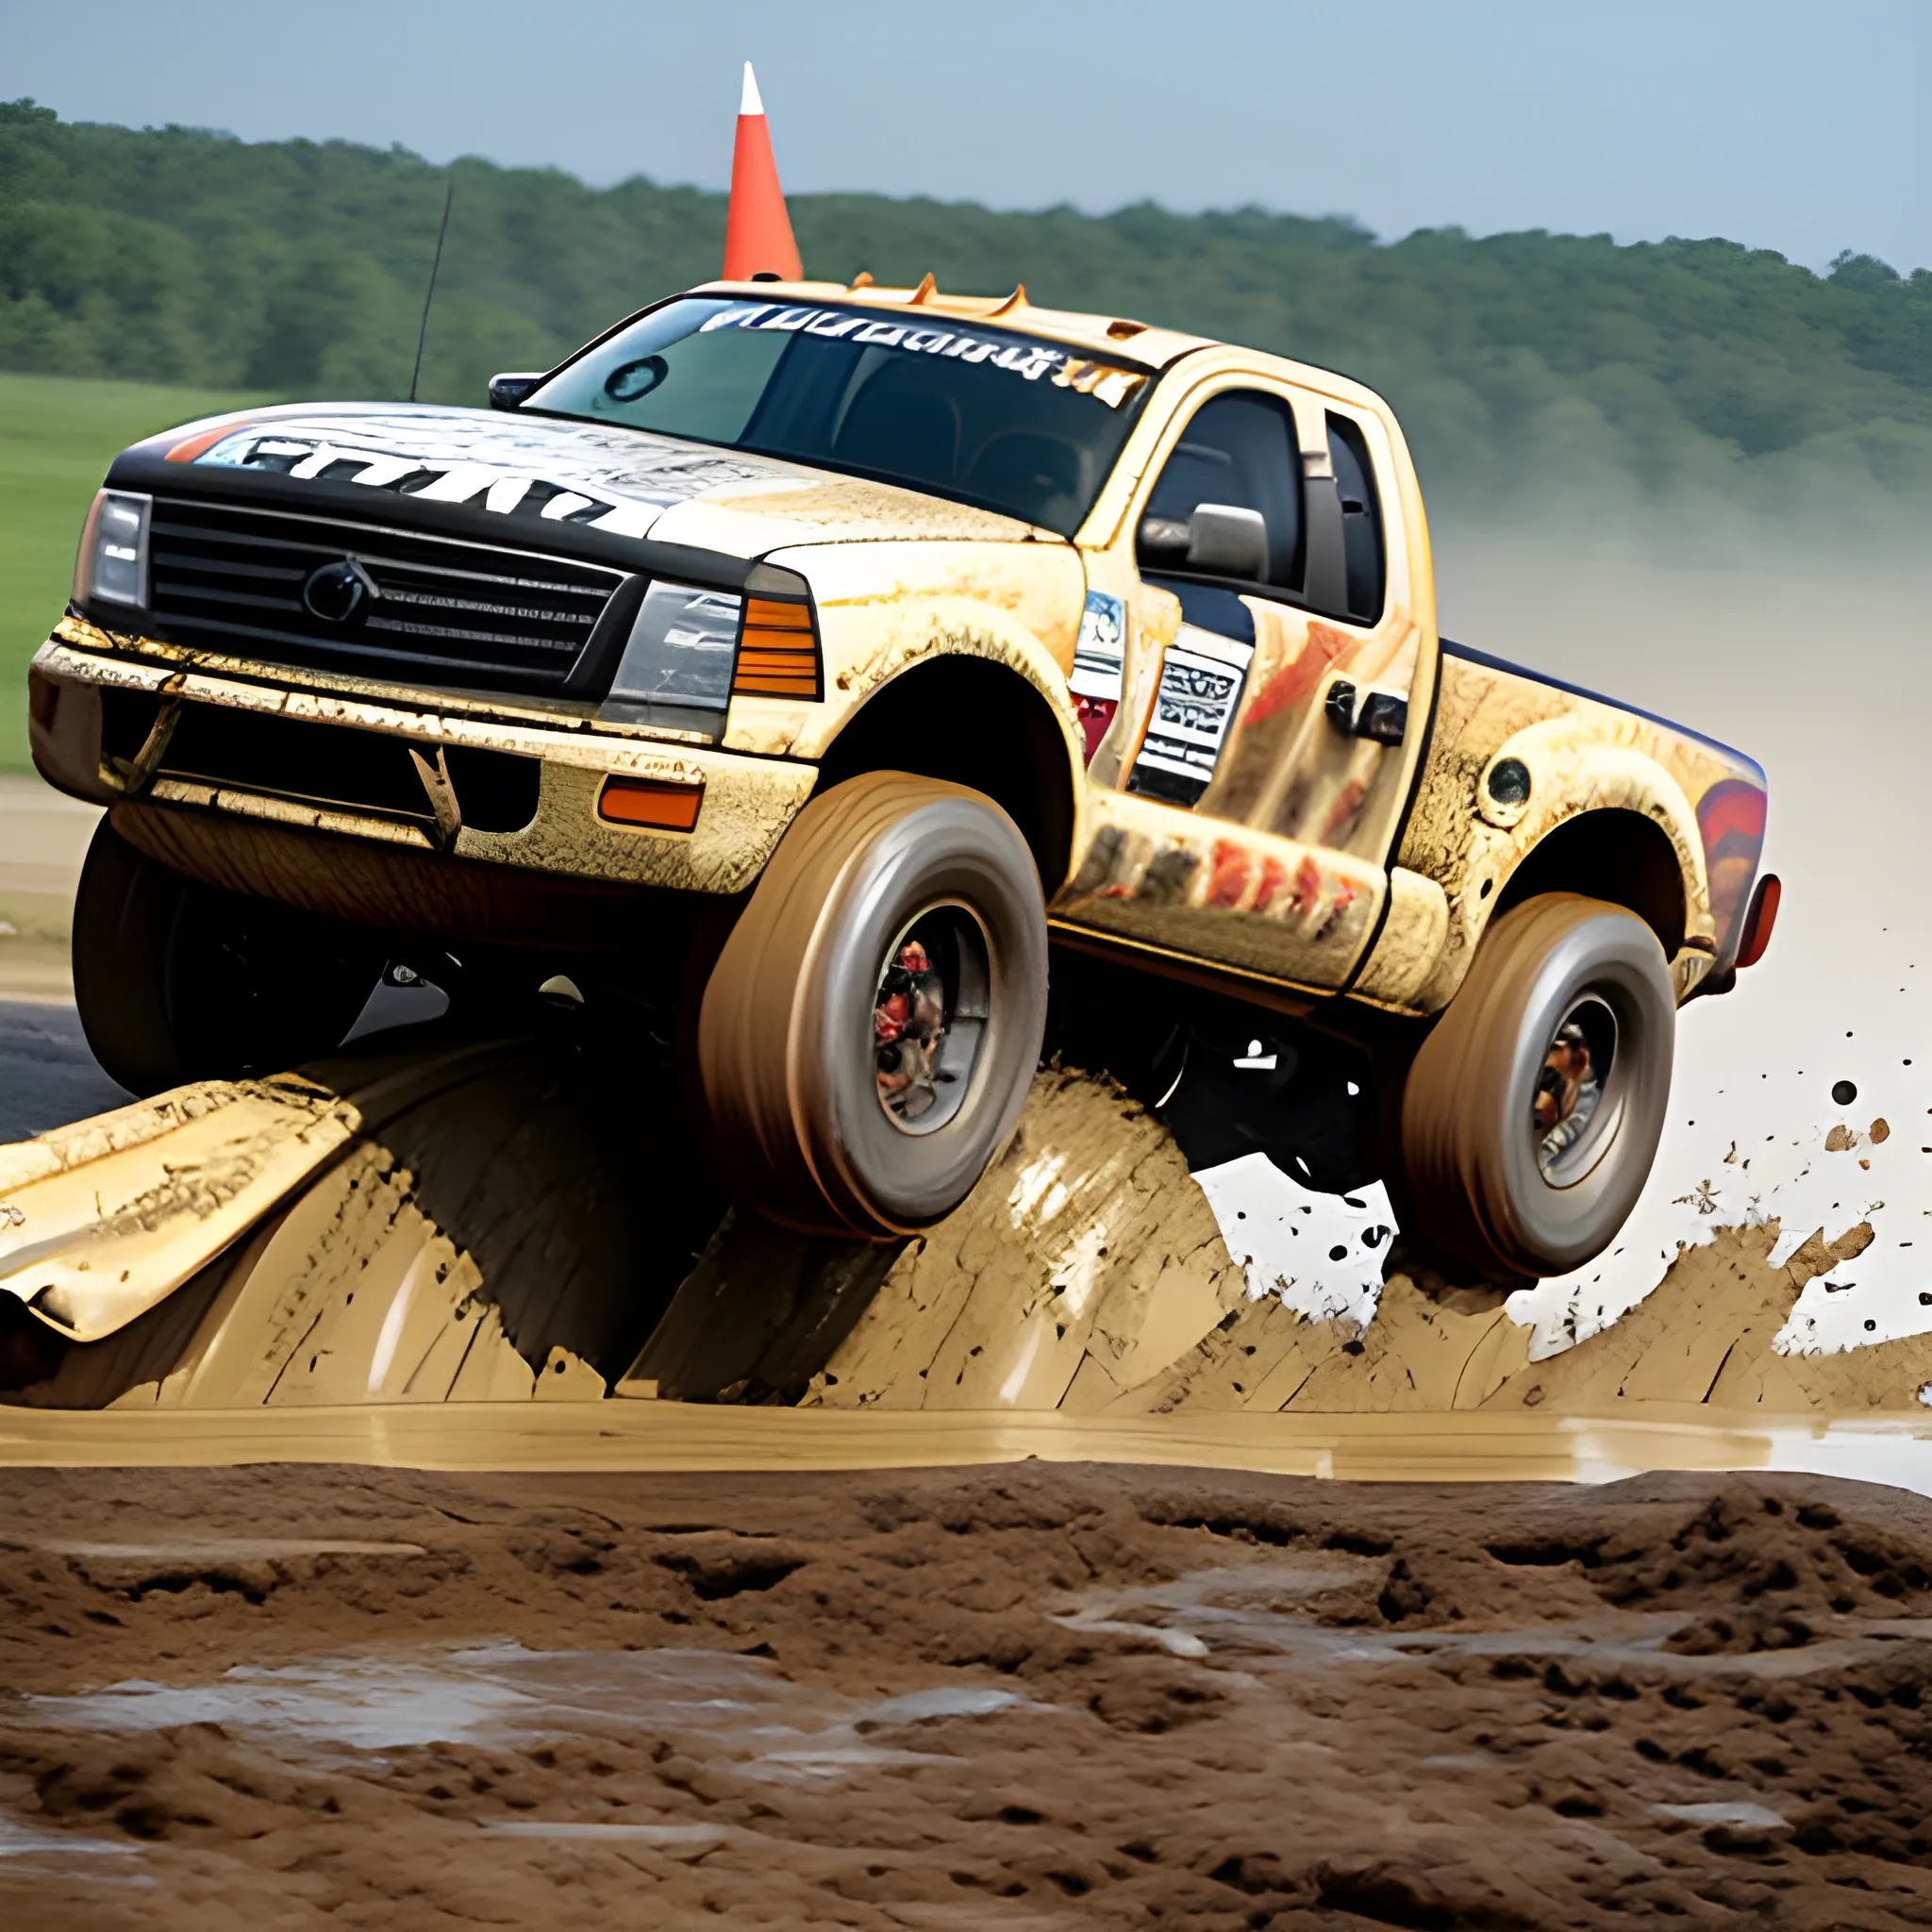  2 truck in mud racing 
